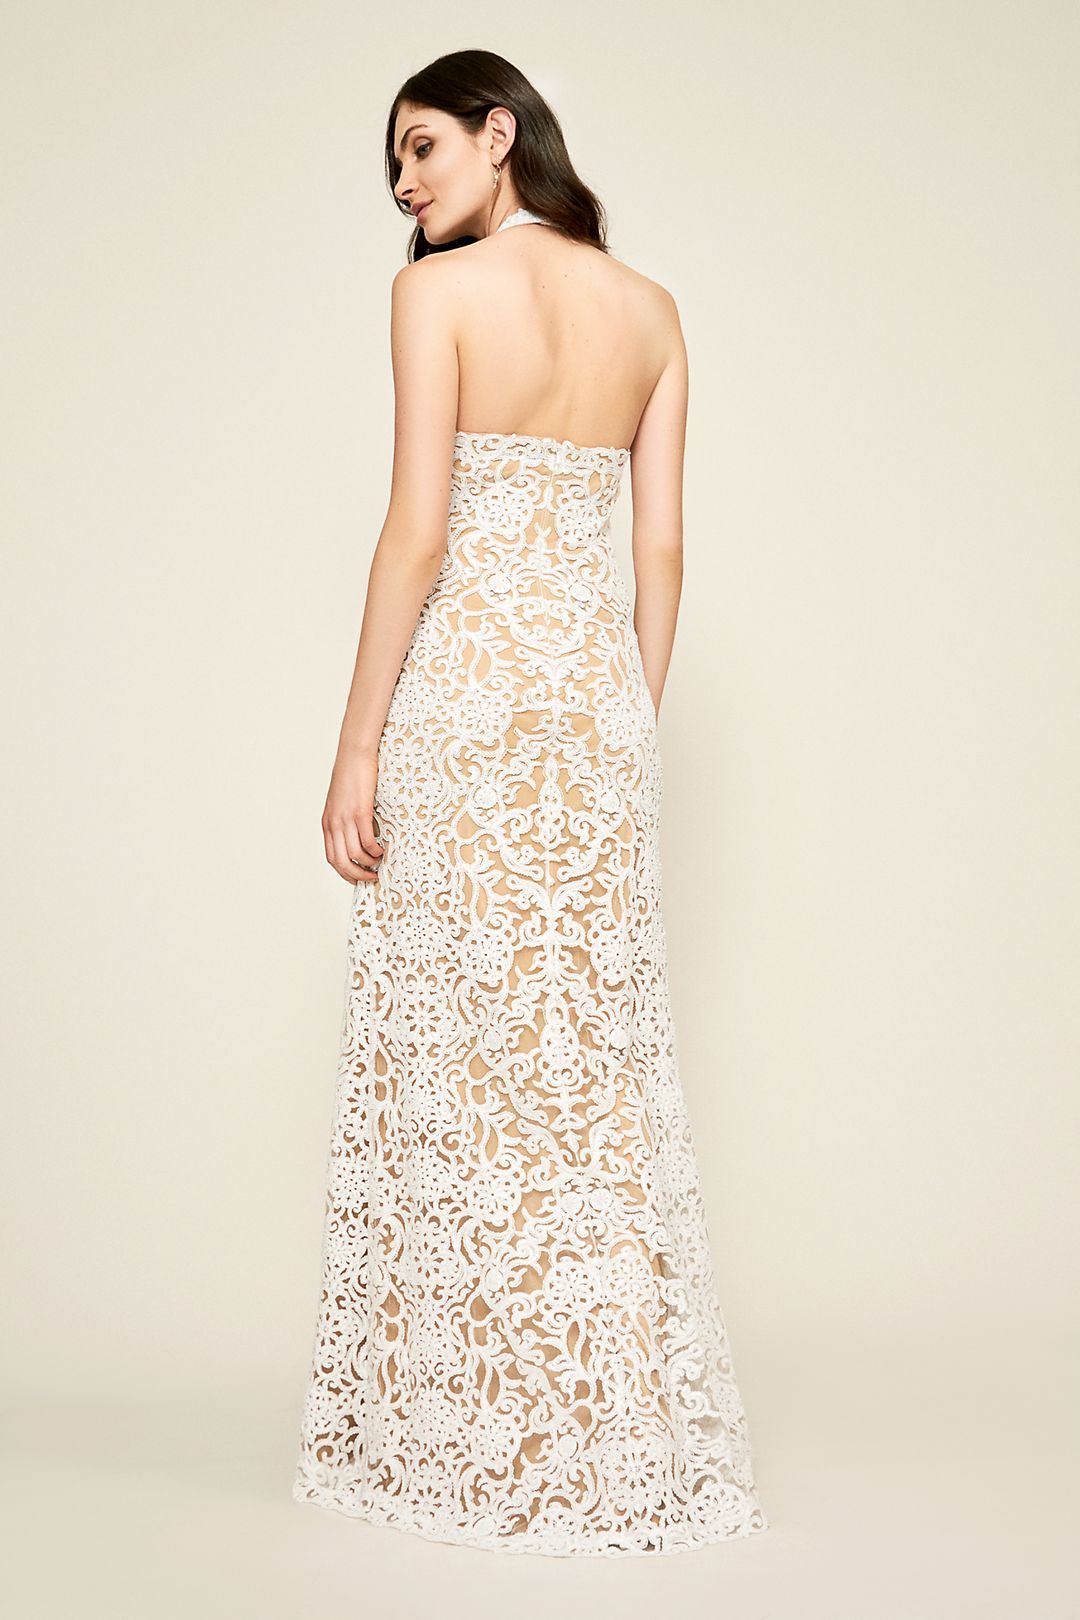 Elanor Sequin Embroidered Halter Wedding Dress Image 2